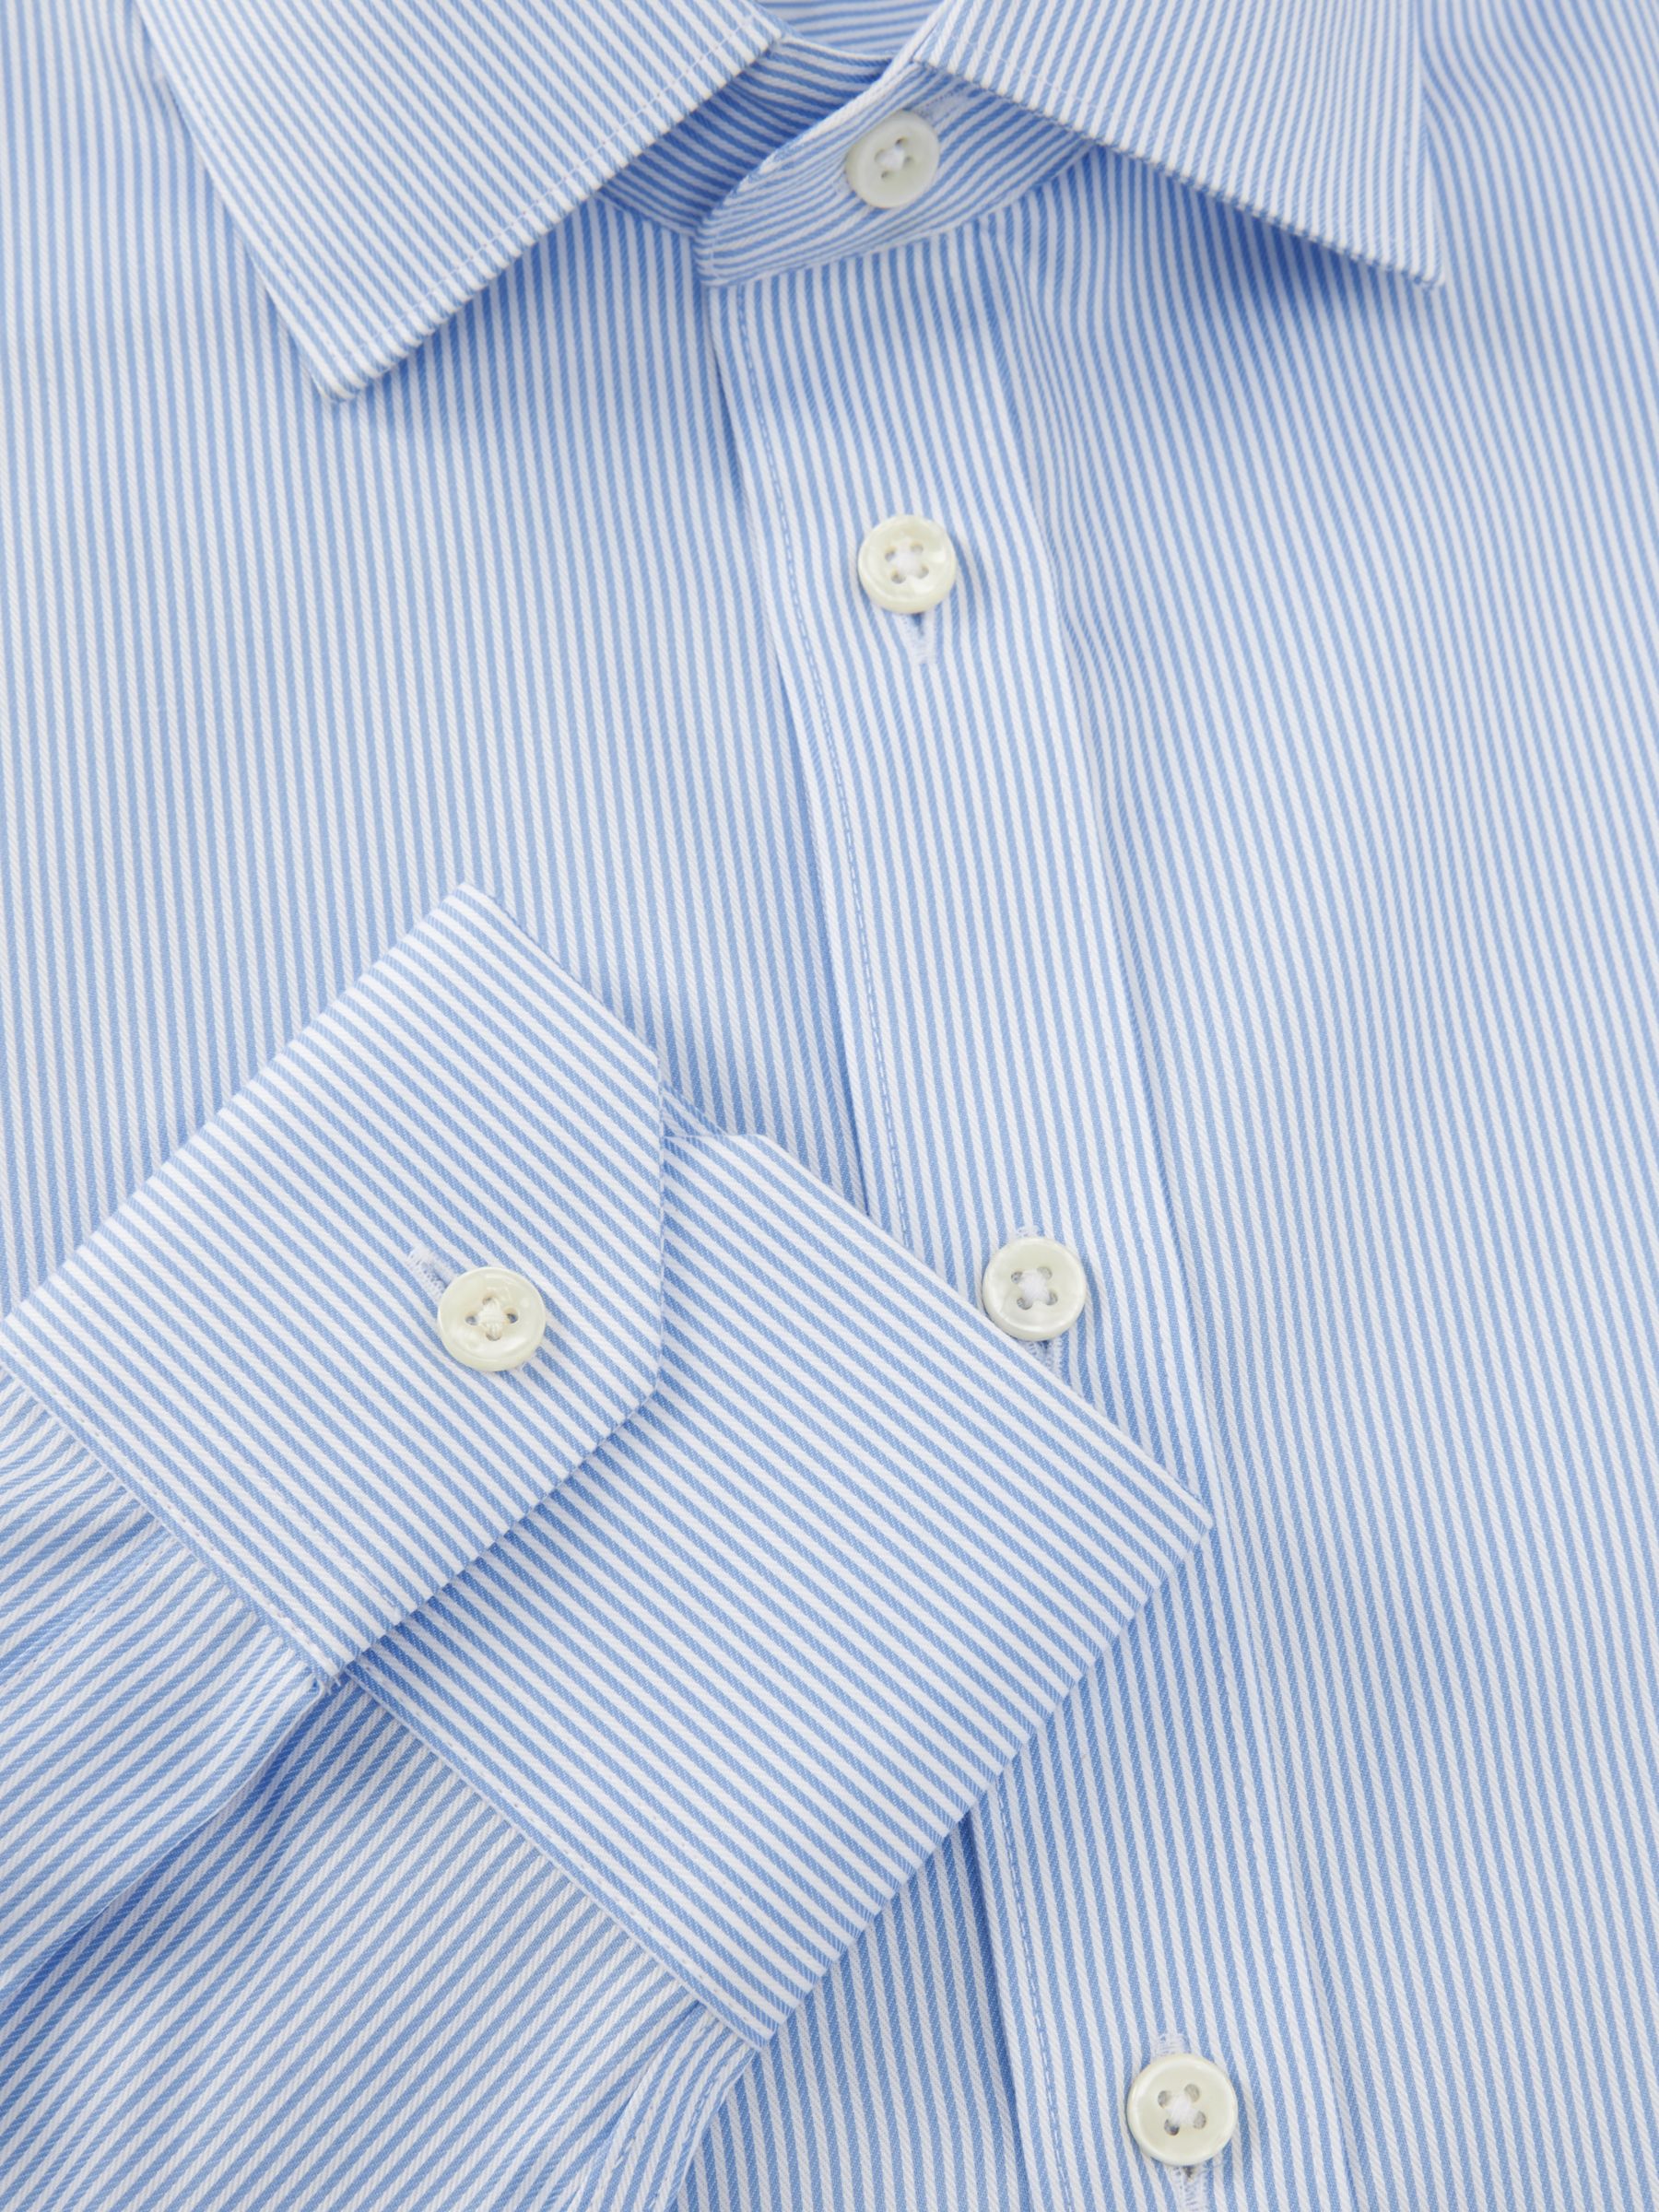 John Lewis Non Iron Bengal Stripe Tailored Fit Shirt, Blue, 17R